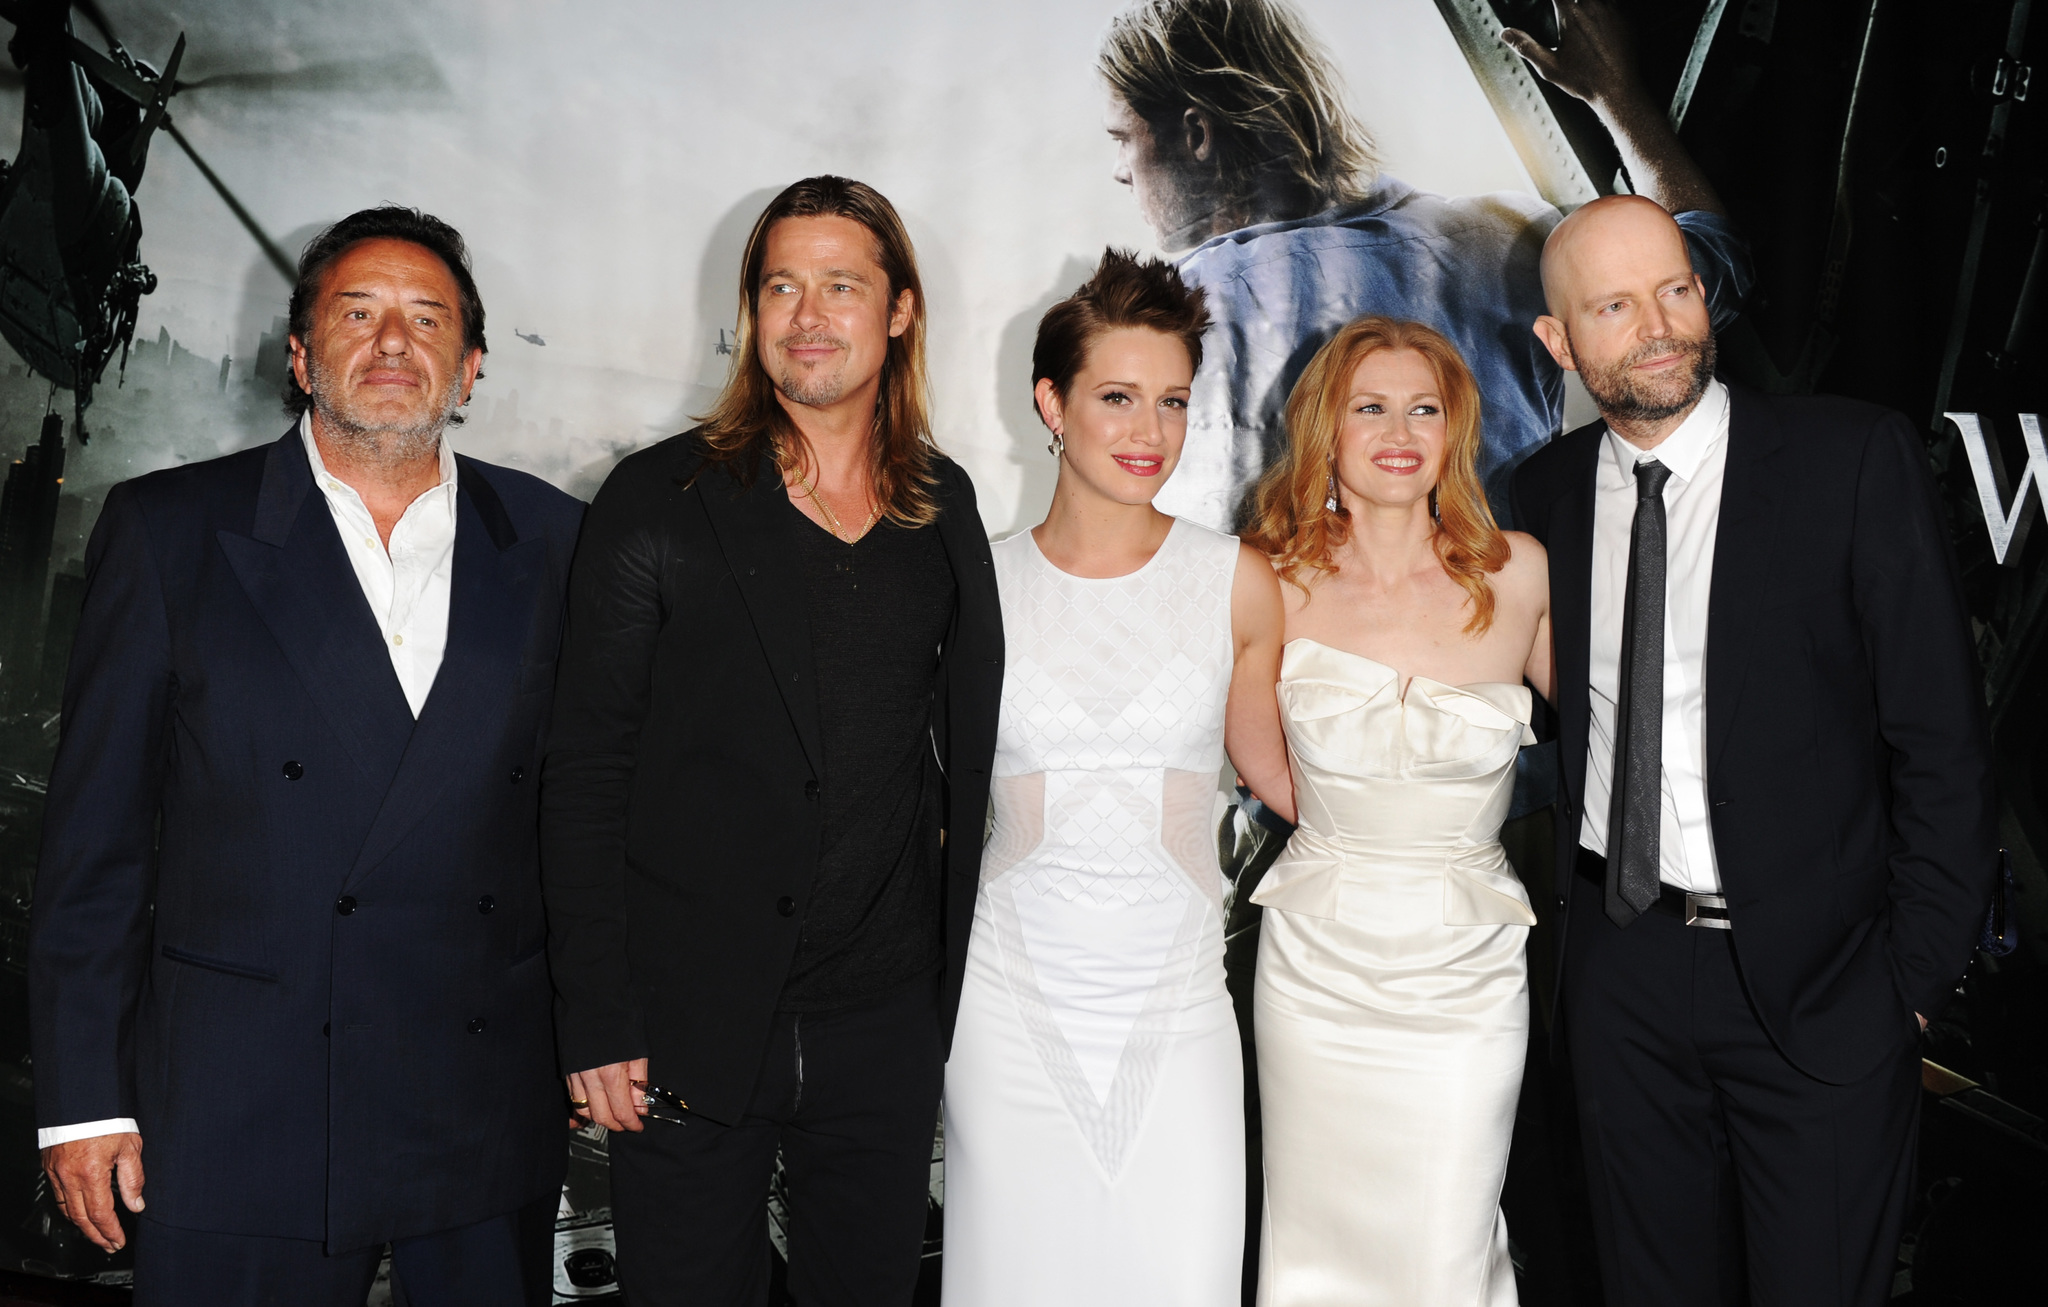 Brad Pitt, Ludi Boeken, Mireille Enos, Marc Forster and Daniella Kertesz at event of Pasaulinis karas Z (2013)